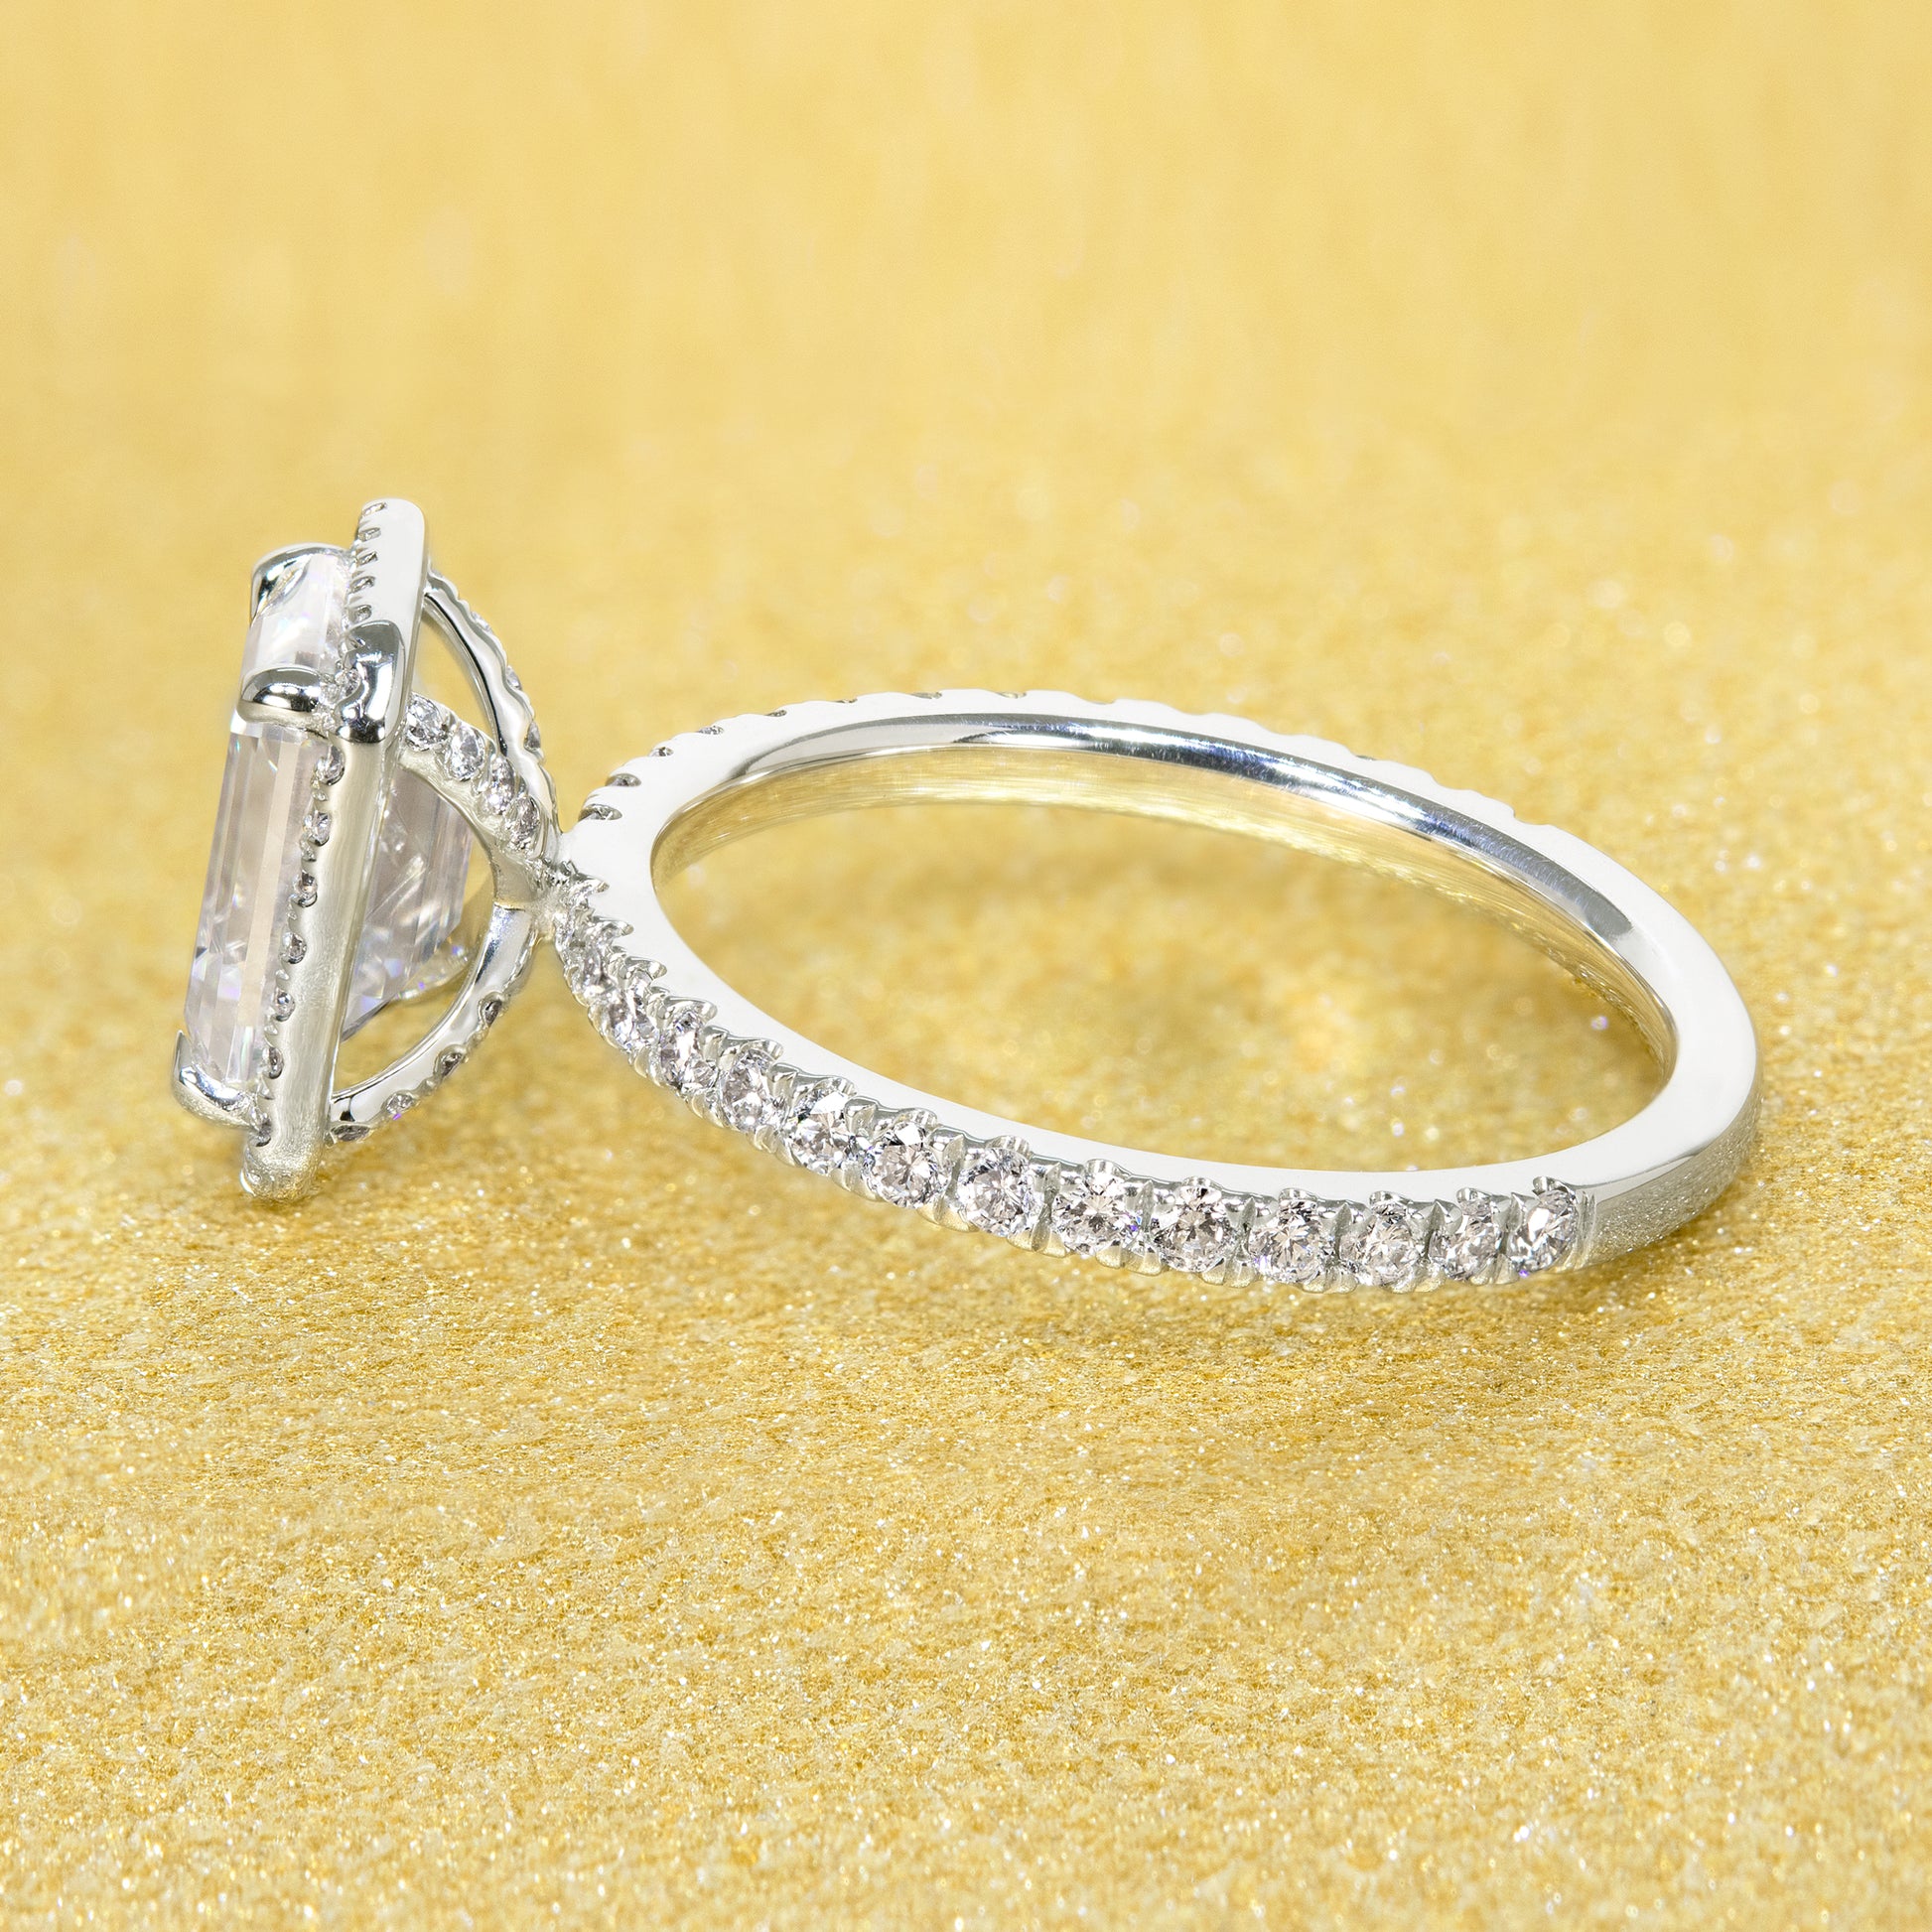 Diamond Wrapped Moissanite Engagement Ring - It's a Wrap Wedding Set